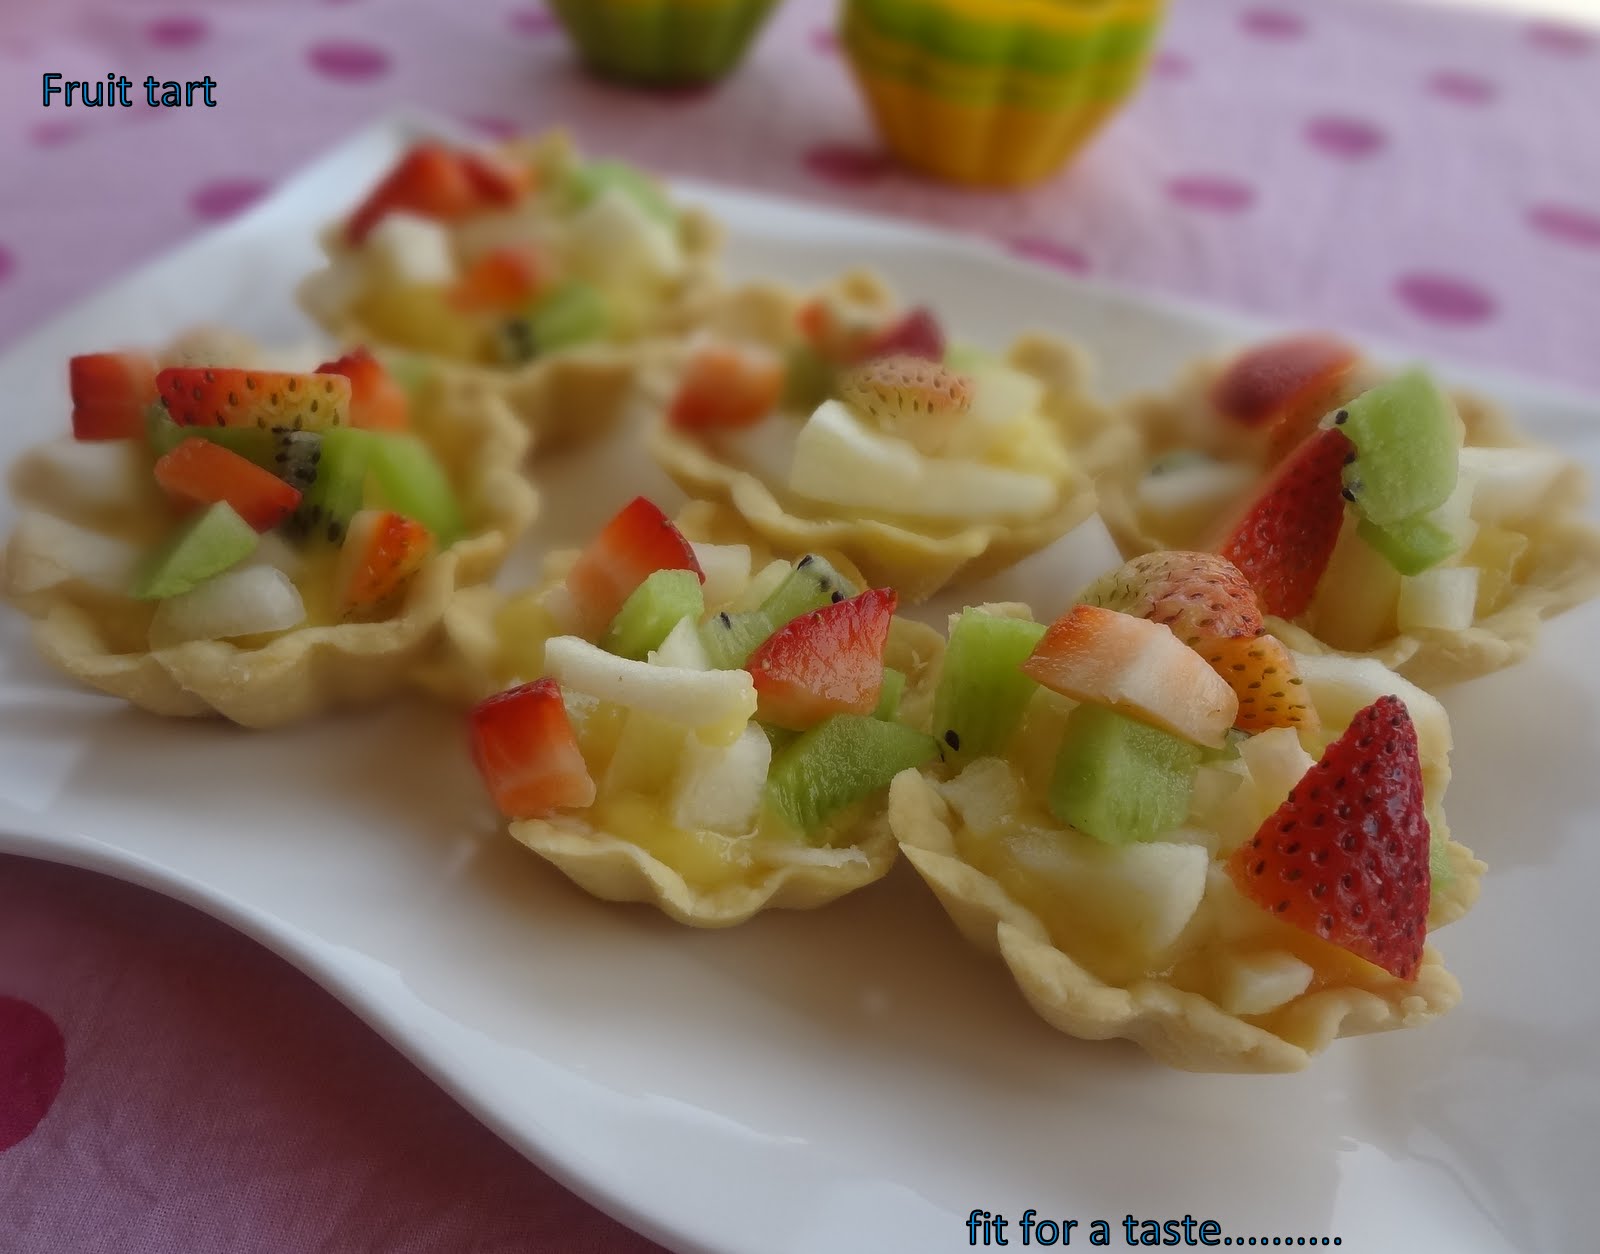 Fit for a taste: Easy Fruit Tart with custard filling